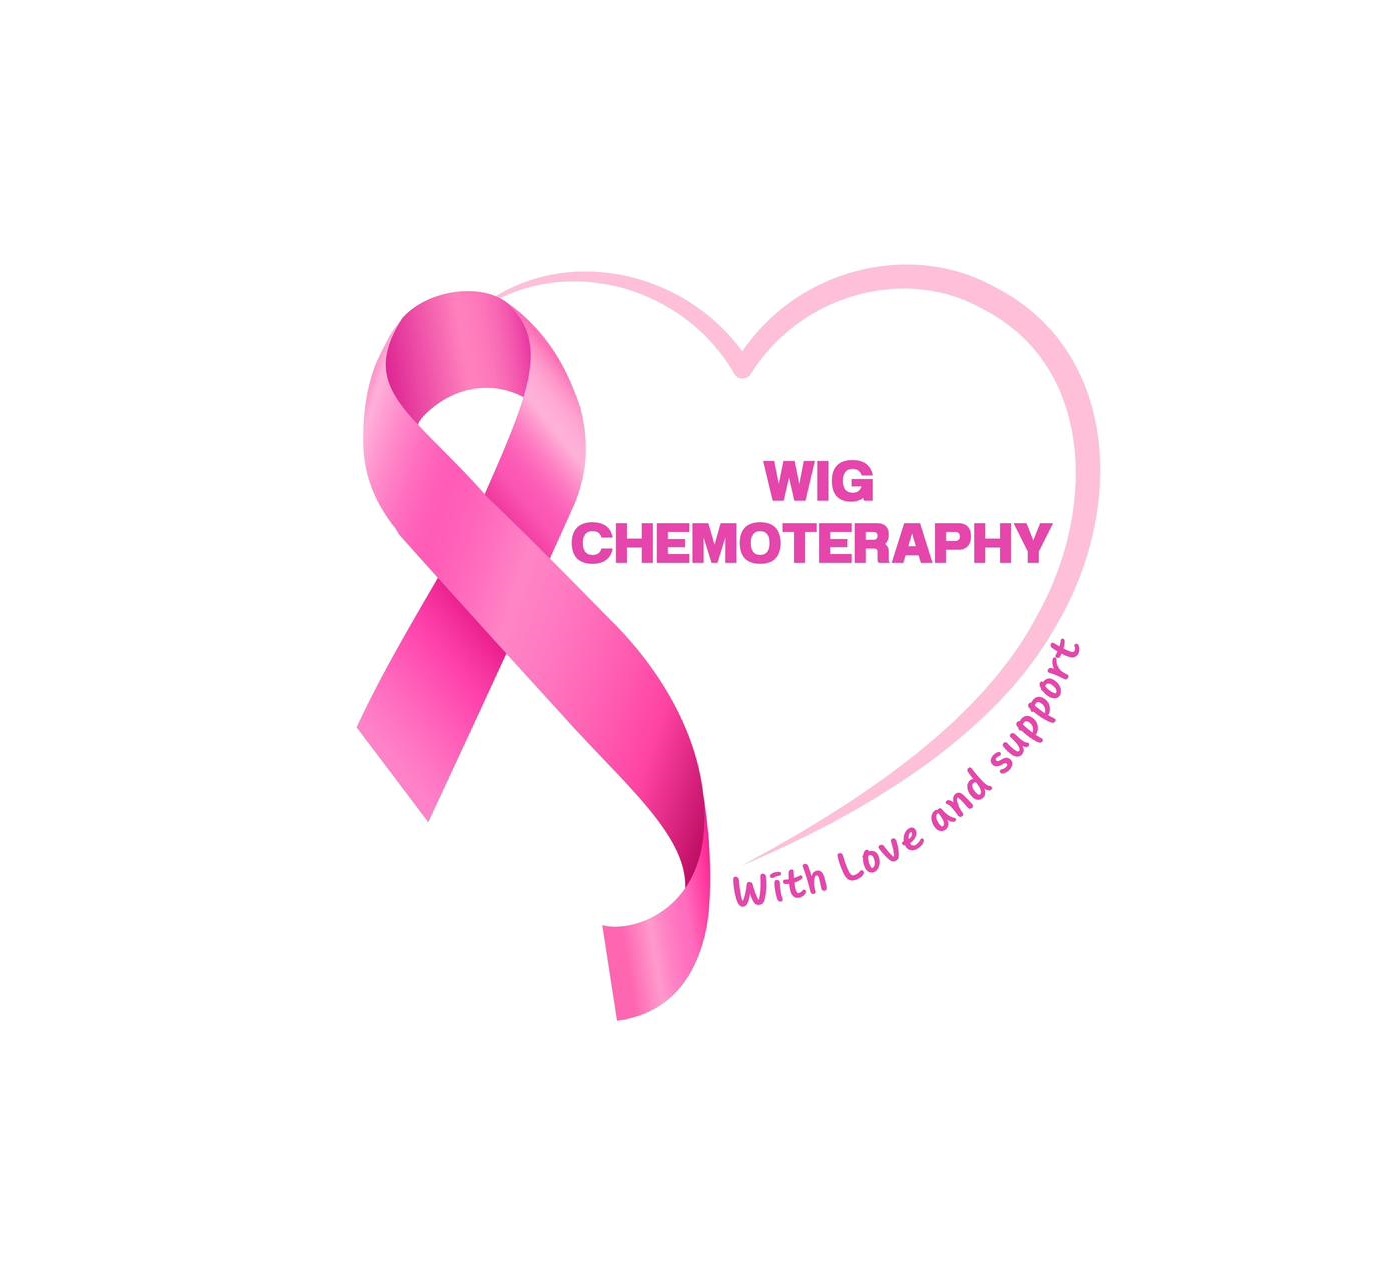 1712127200_logo wig kemoterapi.jpg